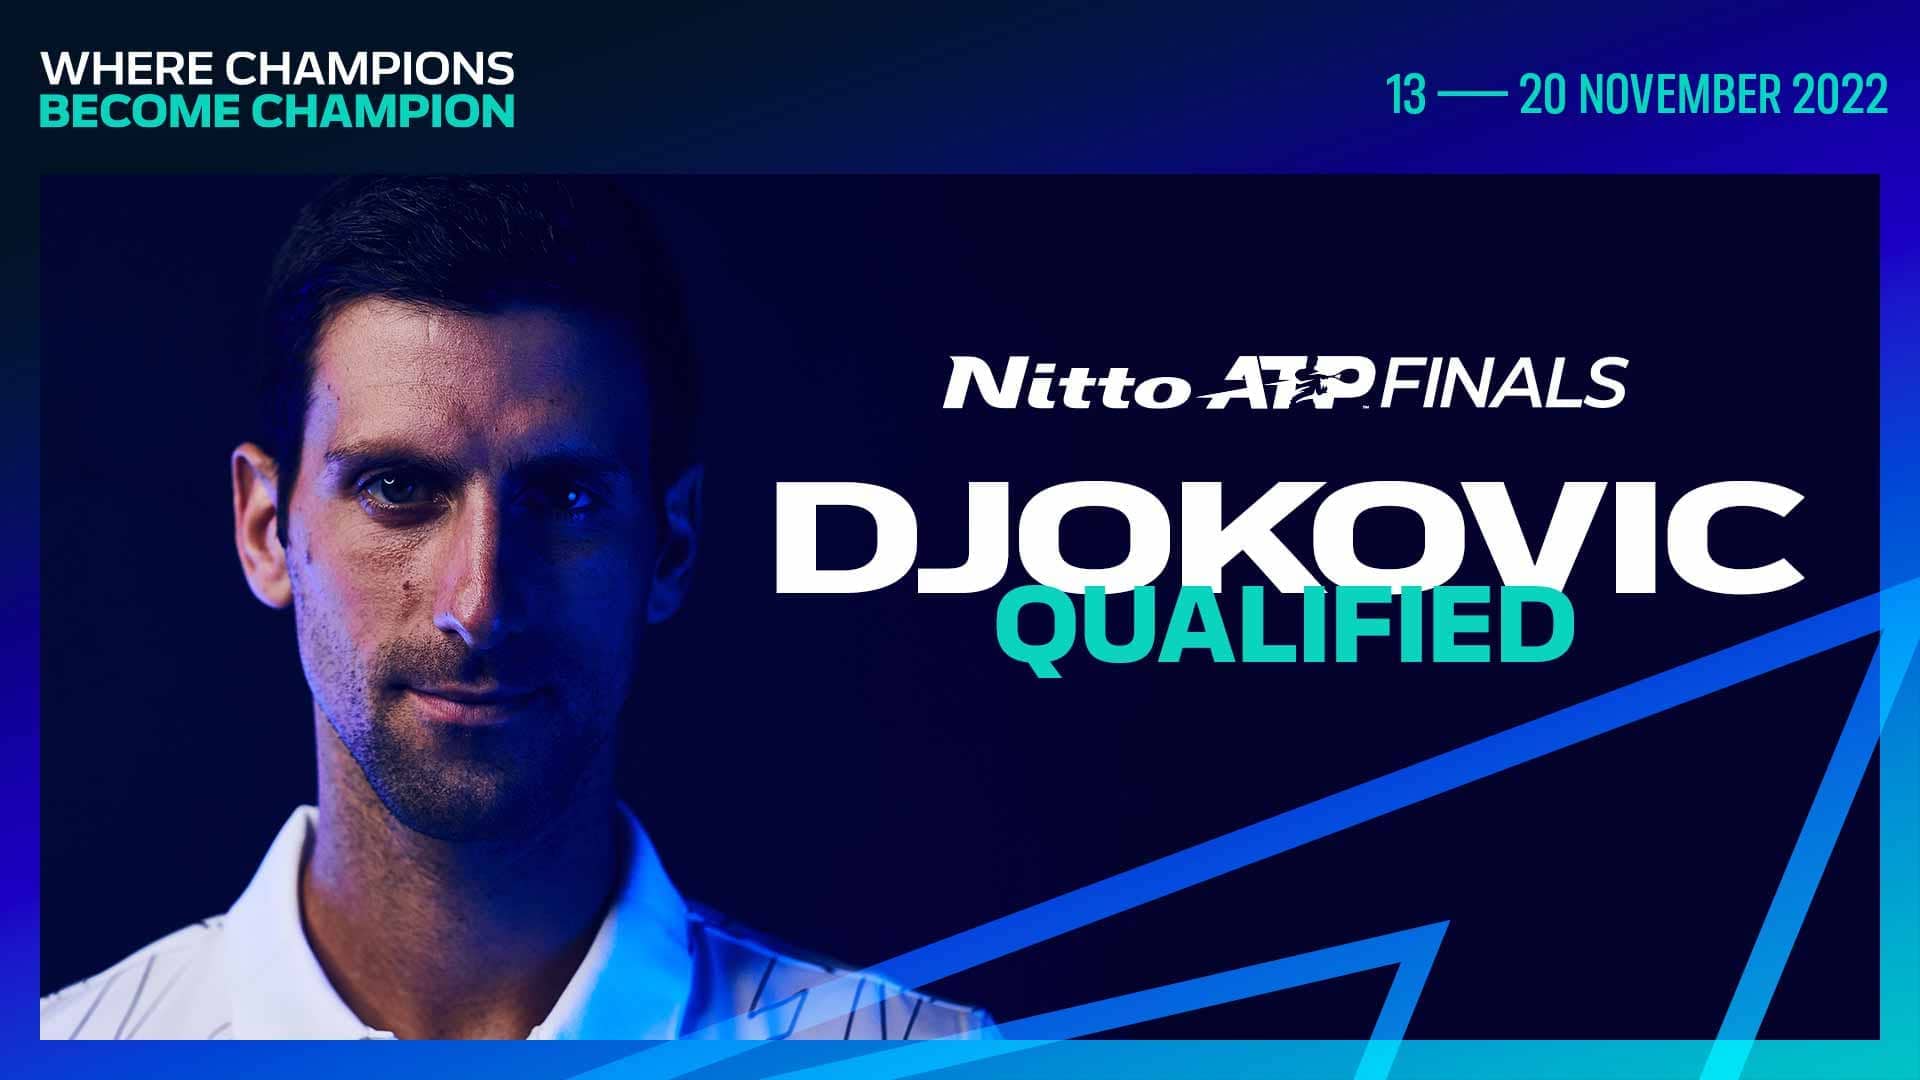 Novak Djokovic qualifies for the Nitto ATP Finals.